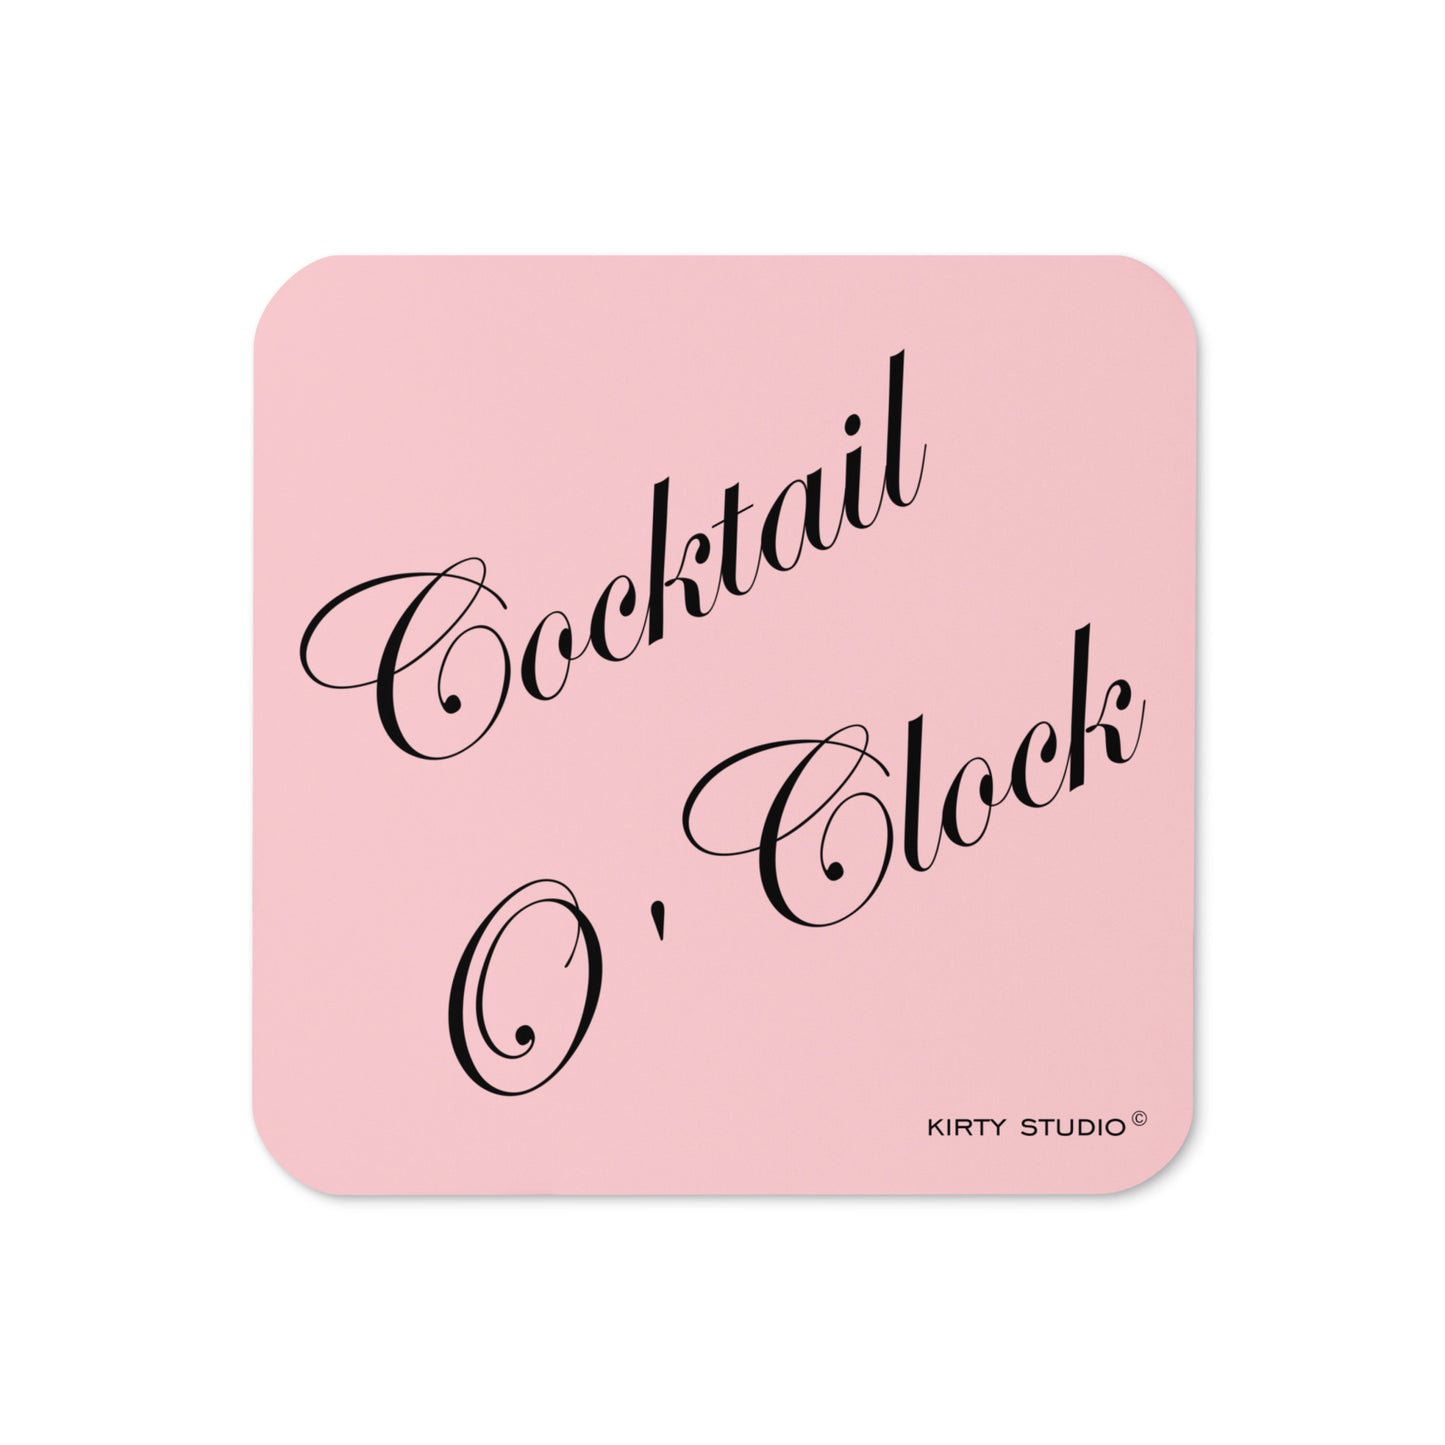 'Cocktail O'Clock' Coaster